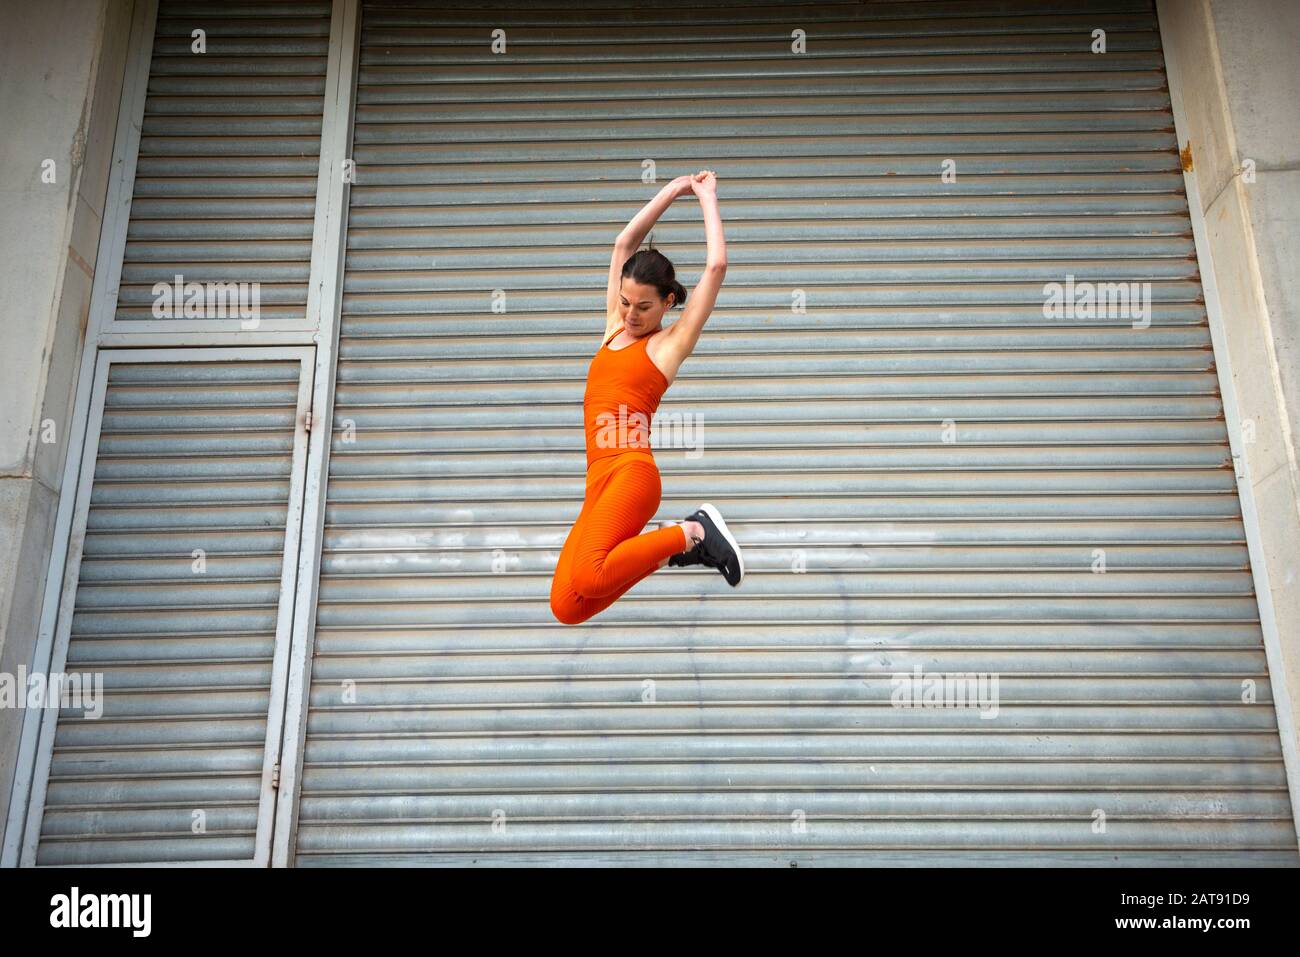 fit woman wearing orange sportswear jumping, urban background. Stock Photo